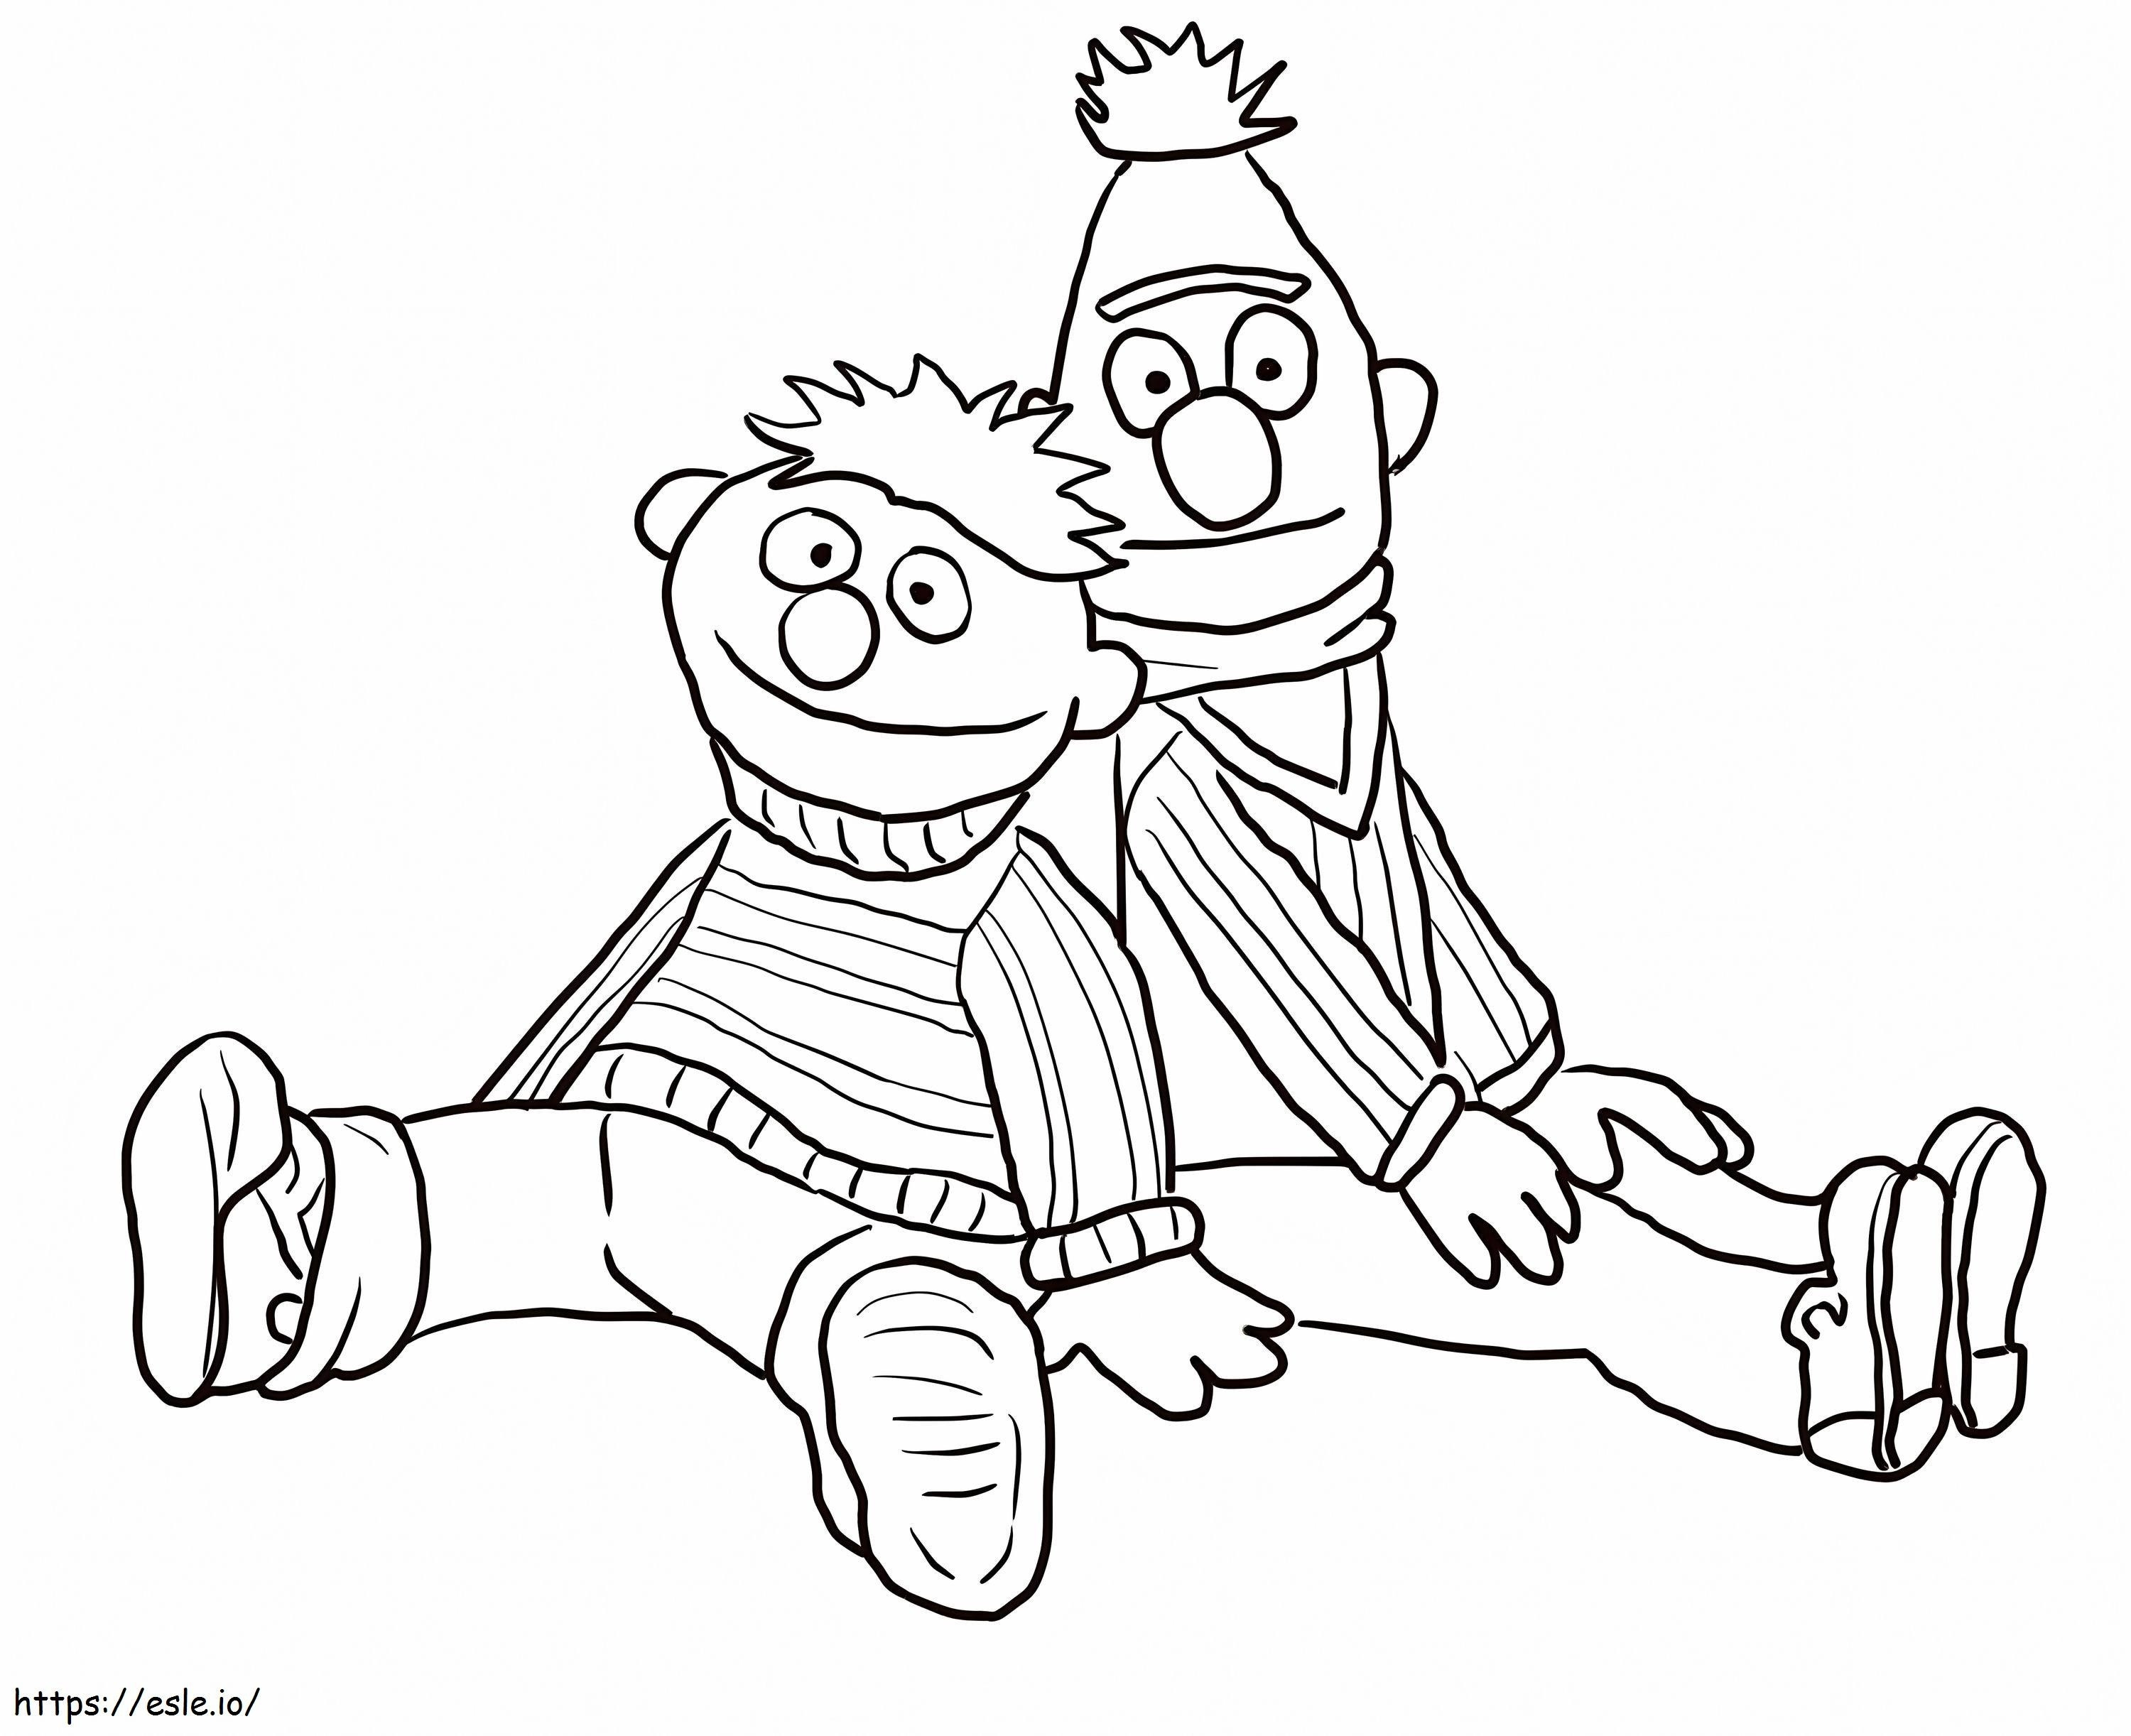  Bert en Ernie kleurplaat kleurplaat